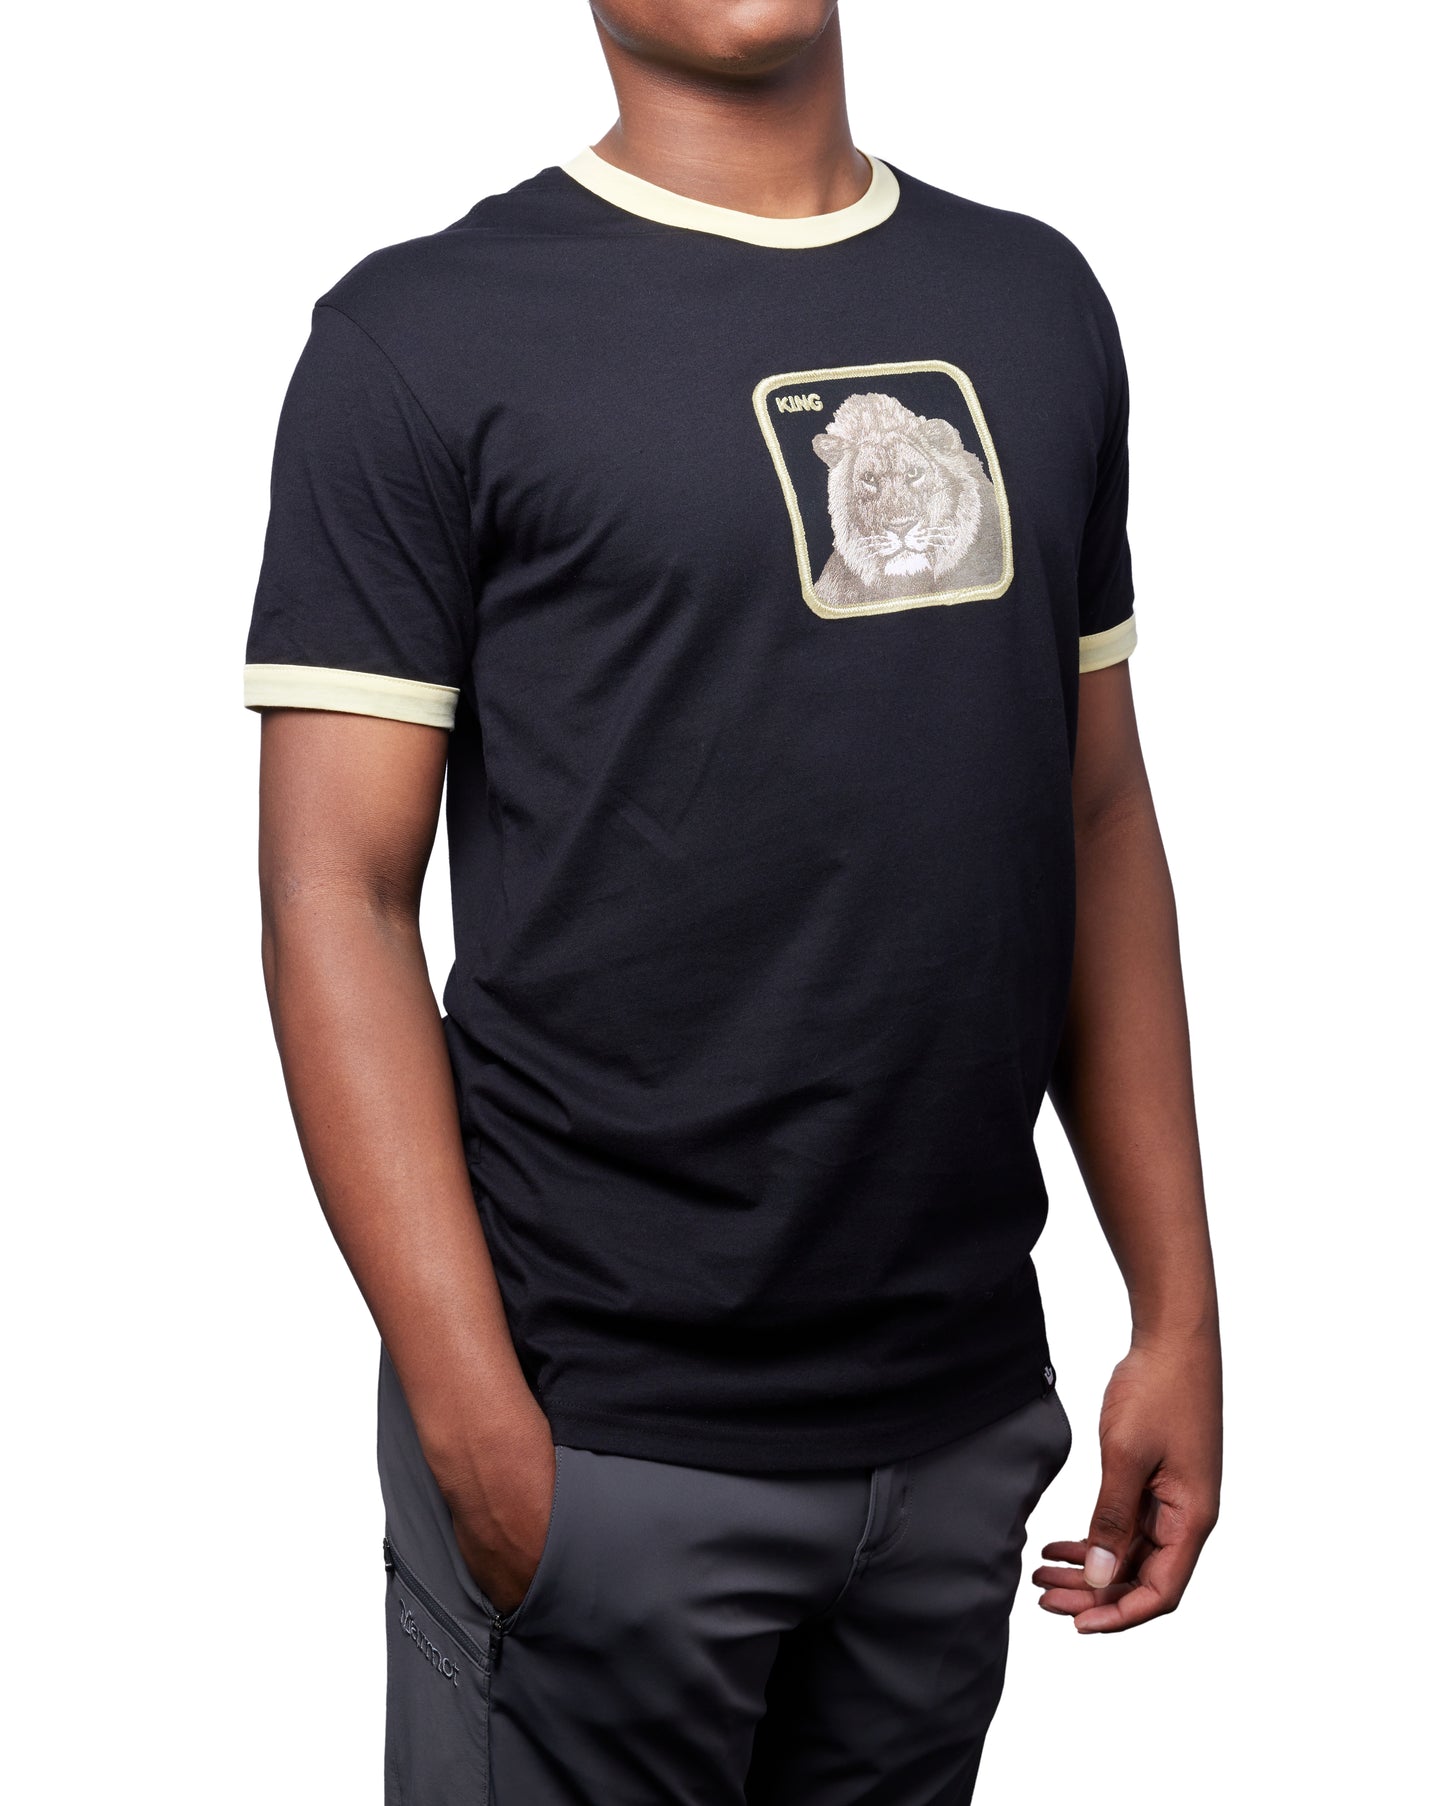 Goorin Bros "KING" T-Shirt in Black color